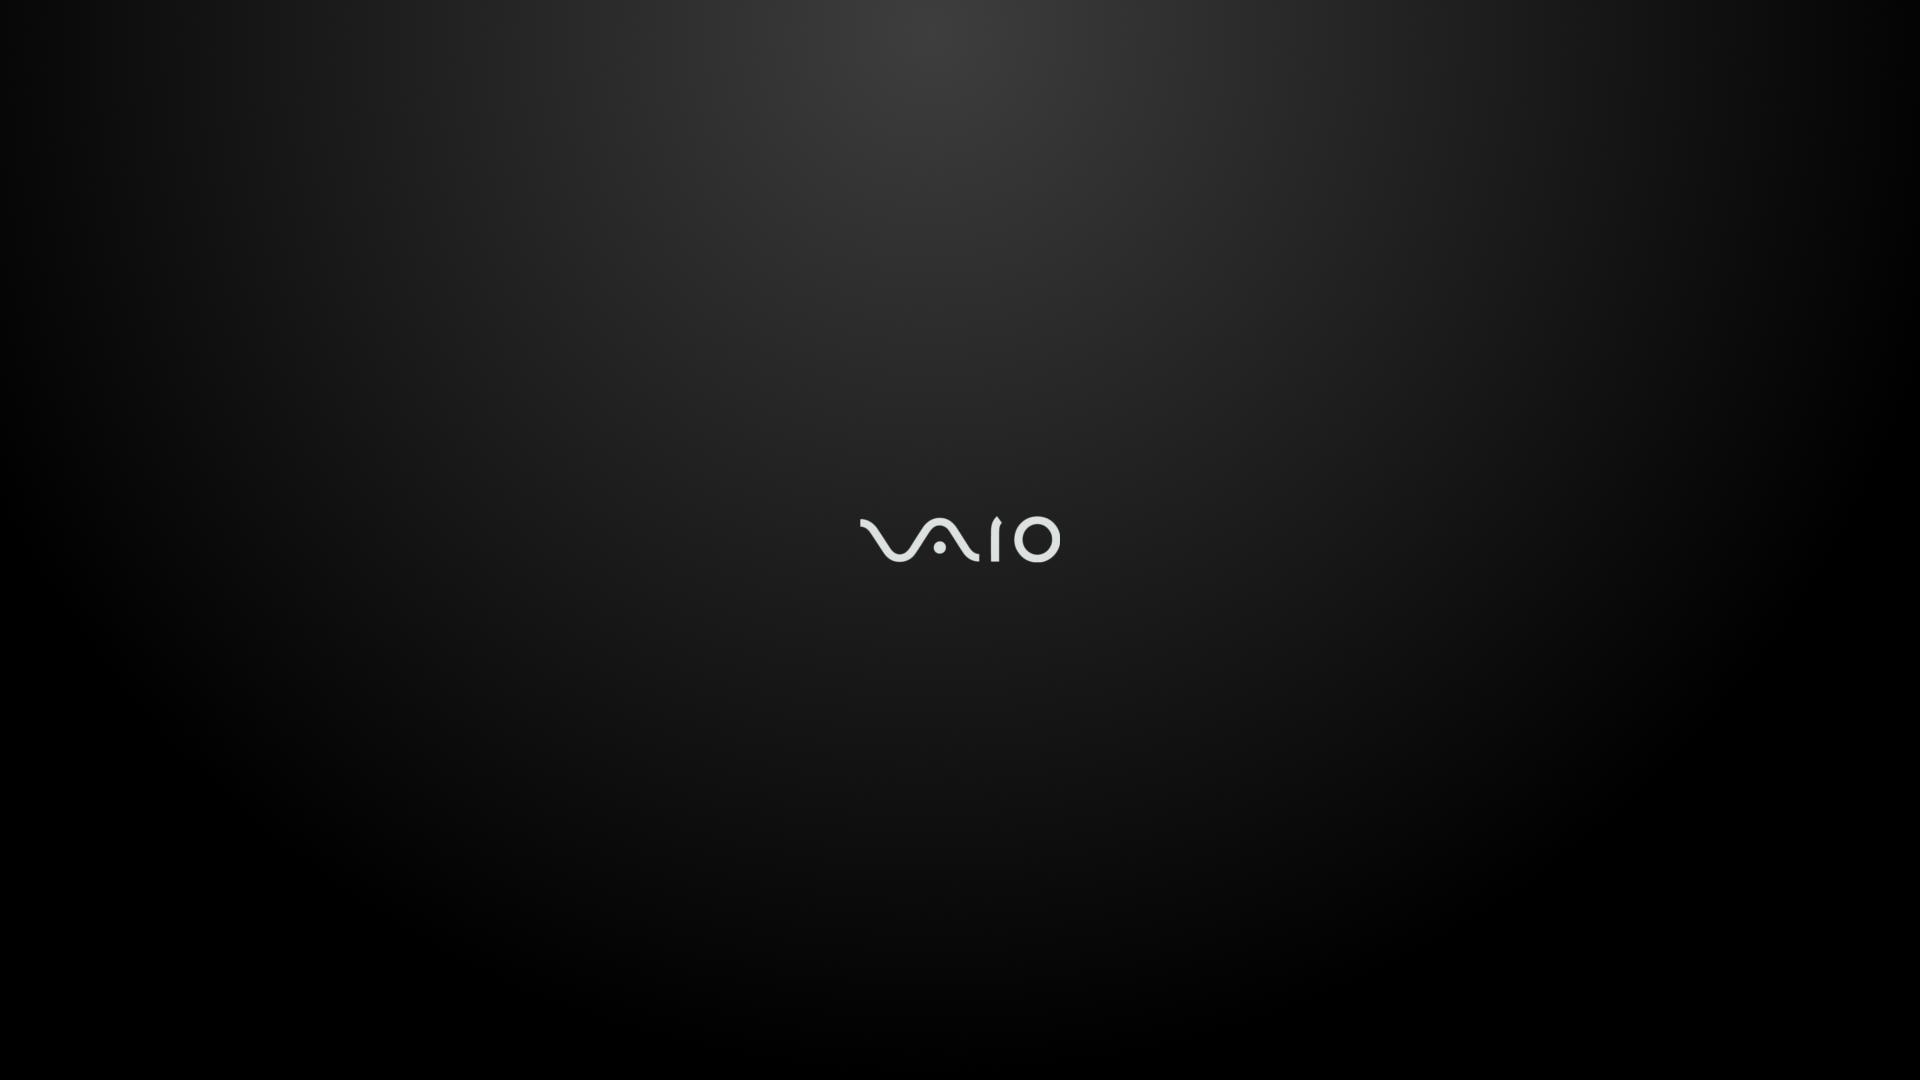 Free Download Black Sony Vaio Wallpaper 3759 3959 Hd Wallpapersjpg 19x1080 For Your Desktop Mobile Tablet Explore 50 Vaio Wallpaper Contents Xperia Wallpaper